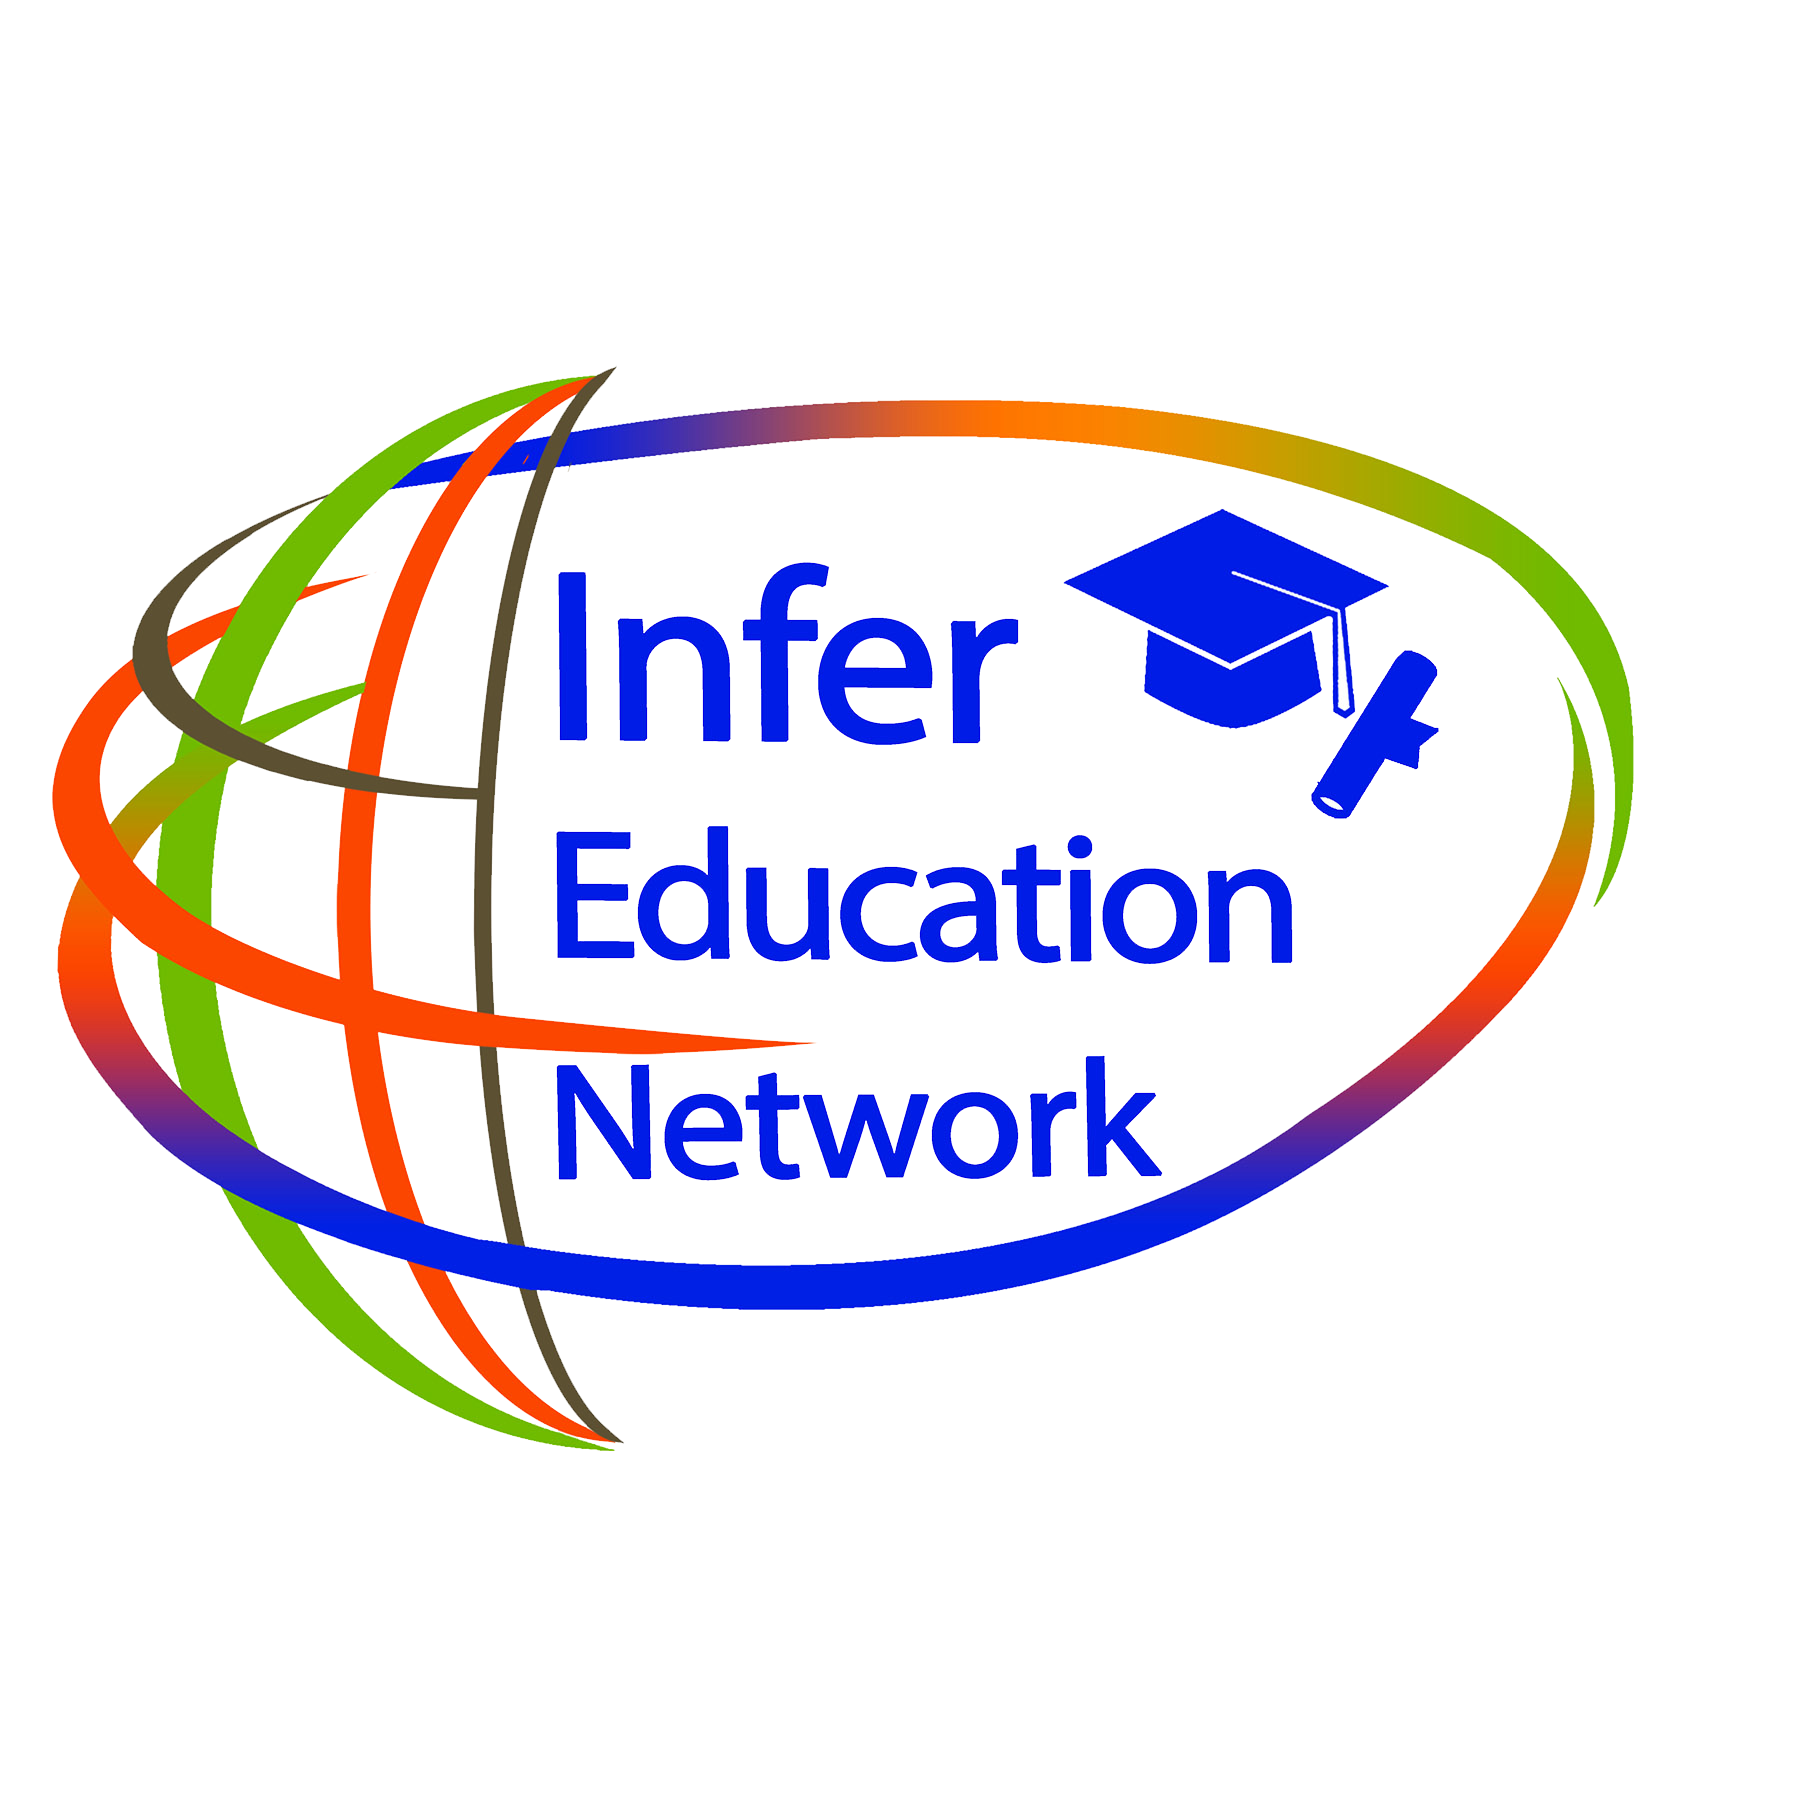 Infer Education Network